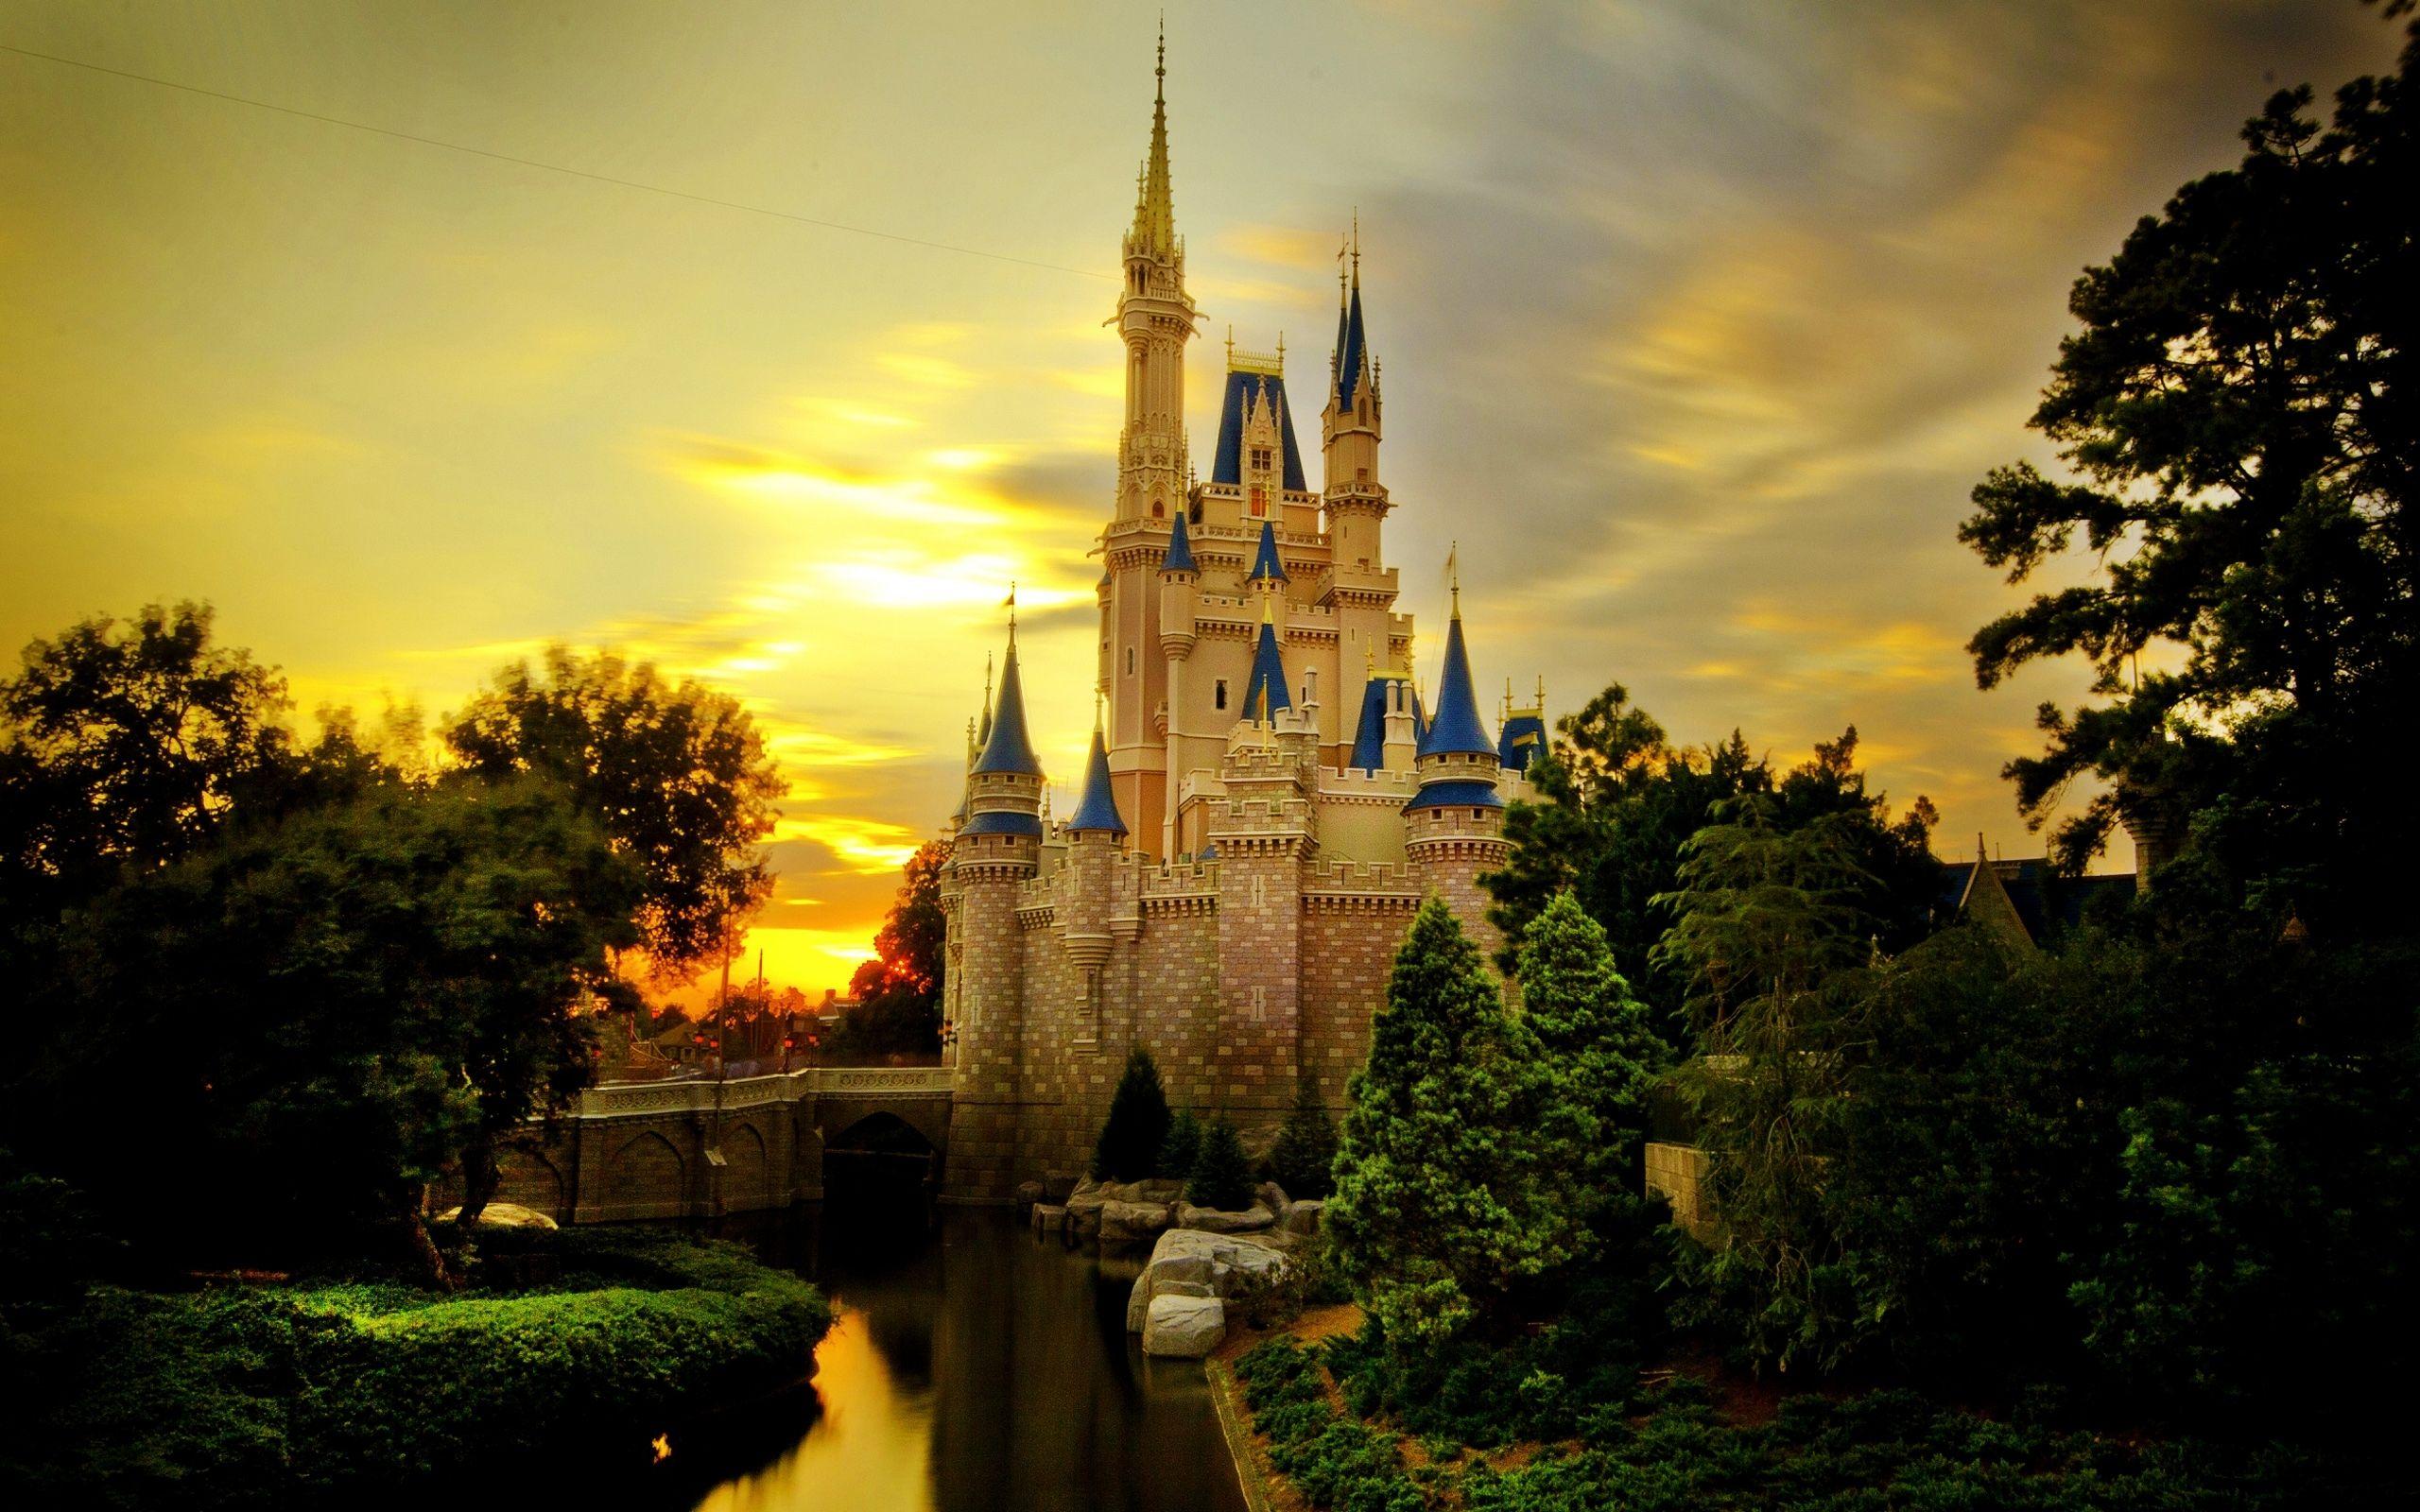 Cinderella Castle Retina MacBook Pro wallpaper. Places to